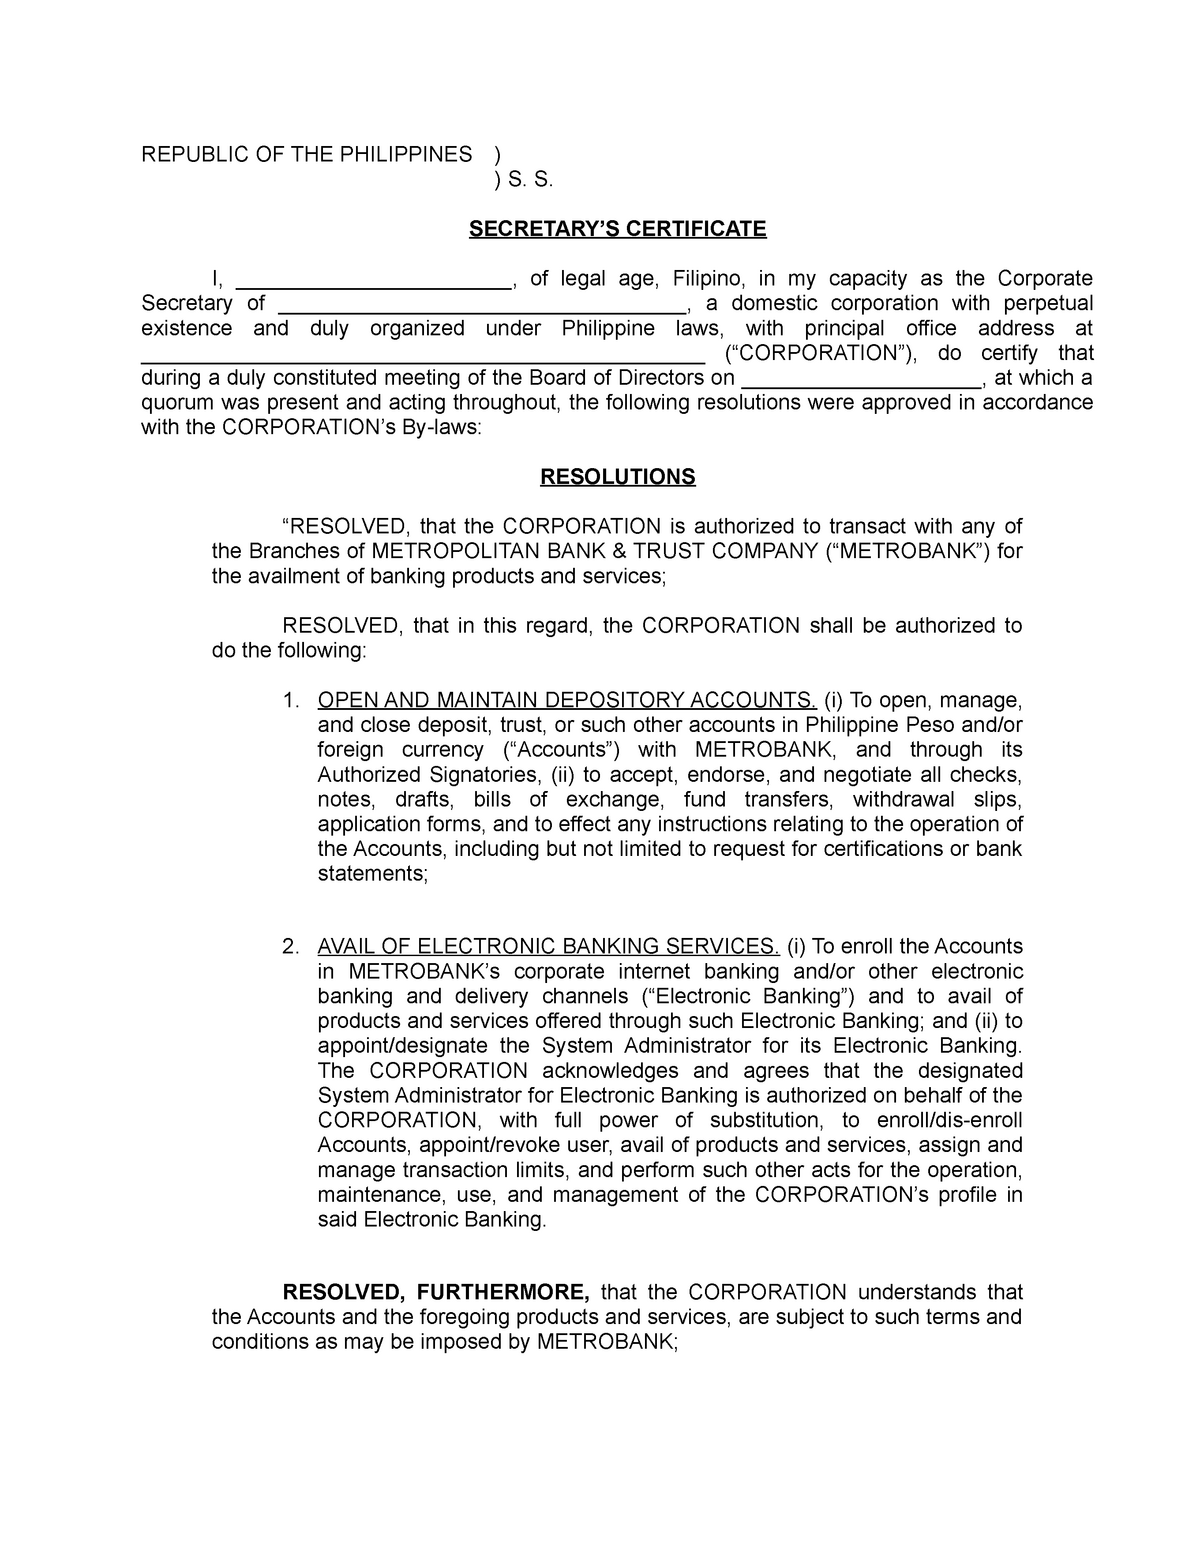 MBOS SEC CERT 23 - Sample Sec cert - REPUBLIC OF THE PHILIPPINES Regarding Corporate Secretary Certificate Template